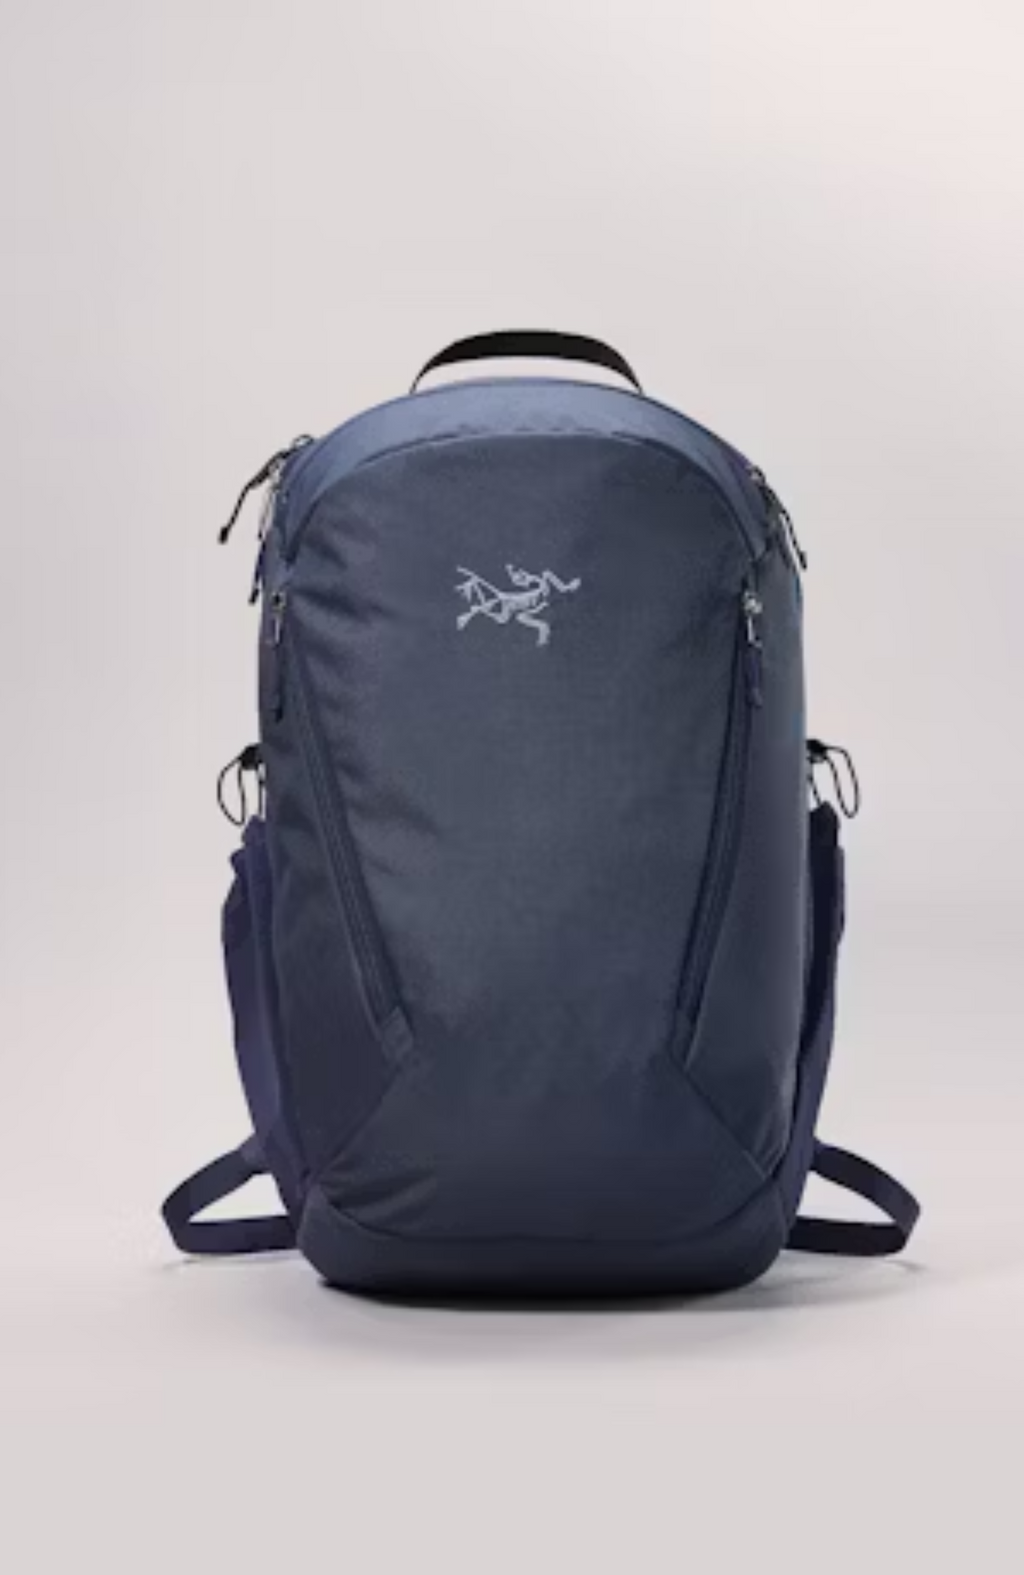 Arcteryx - Mantis 26 Backpack